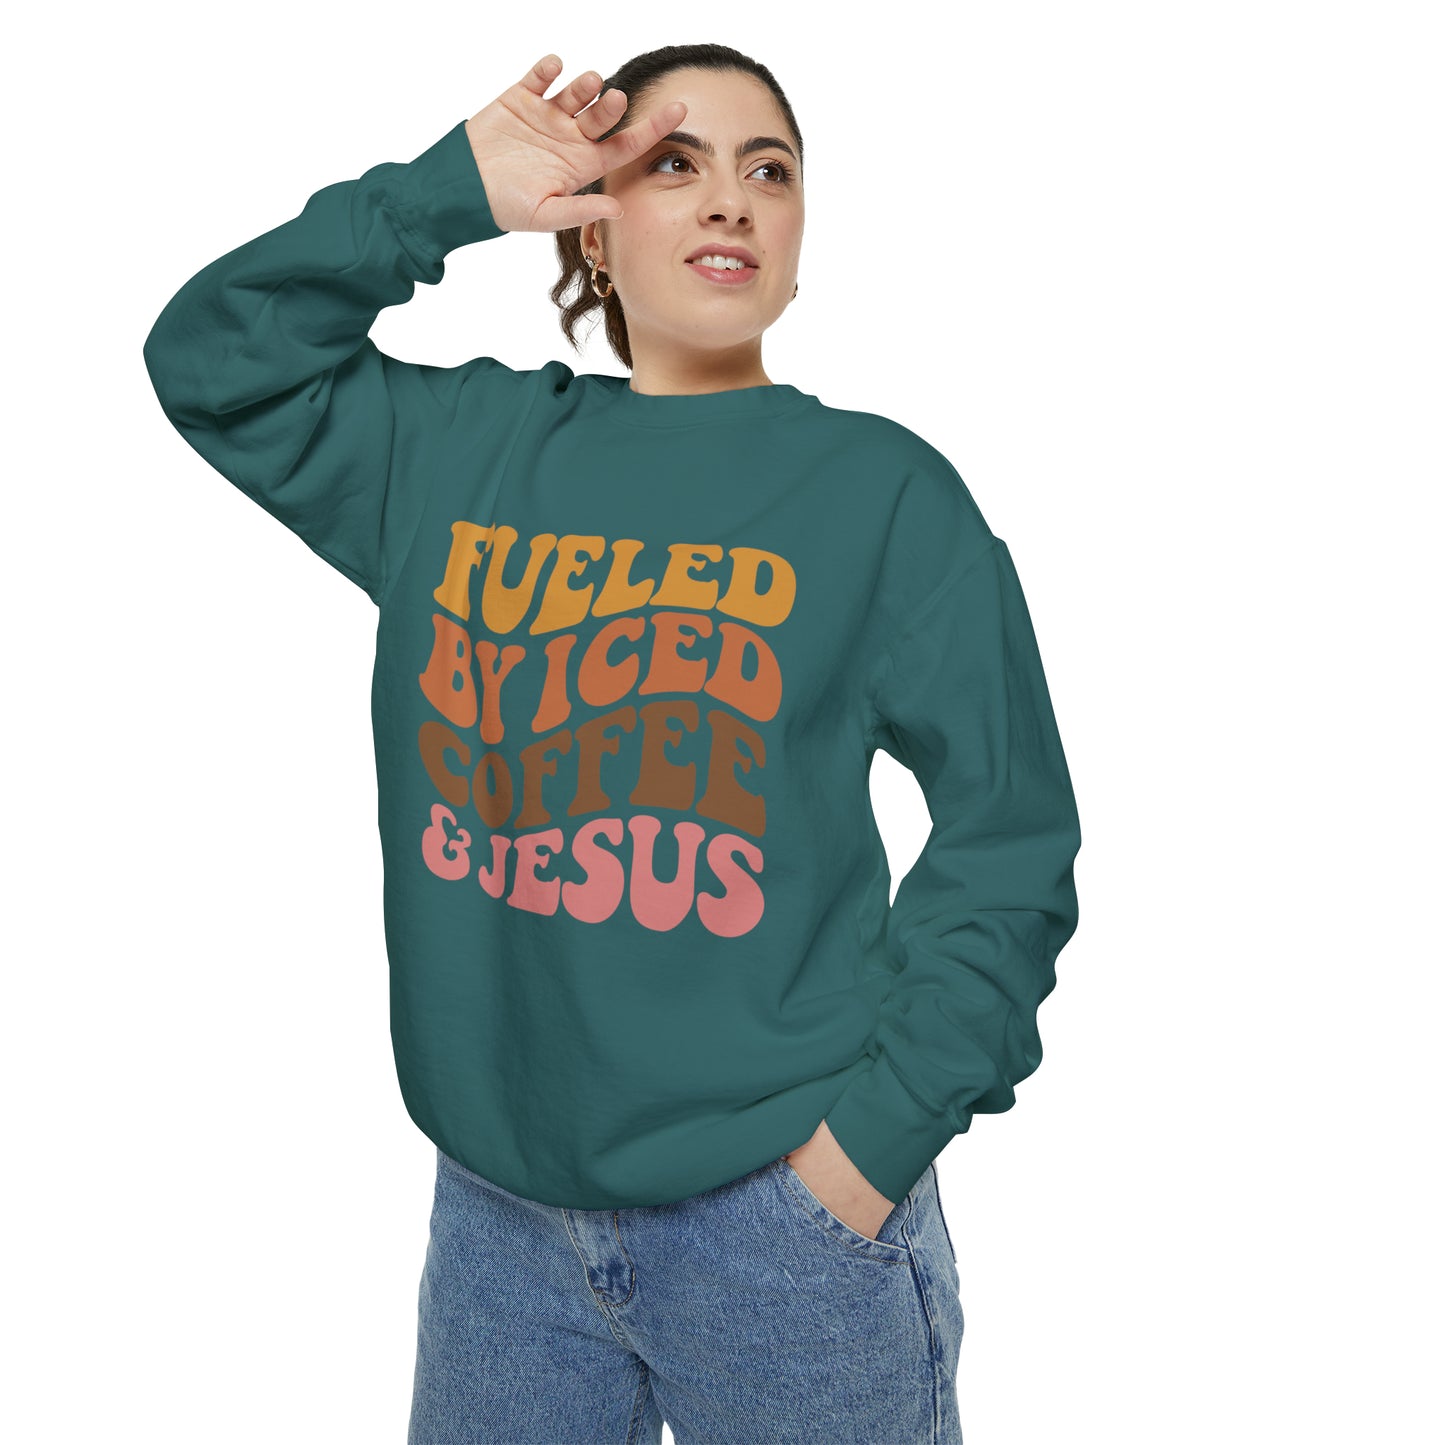 Fueled By Iced Coffee and Jesus | Jesus Sweatshirt